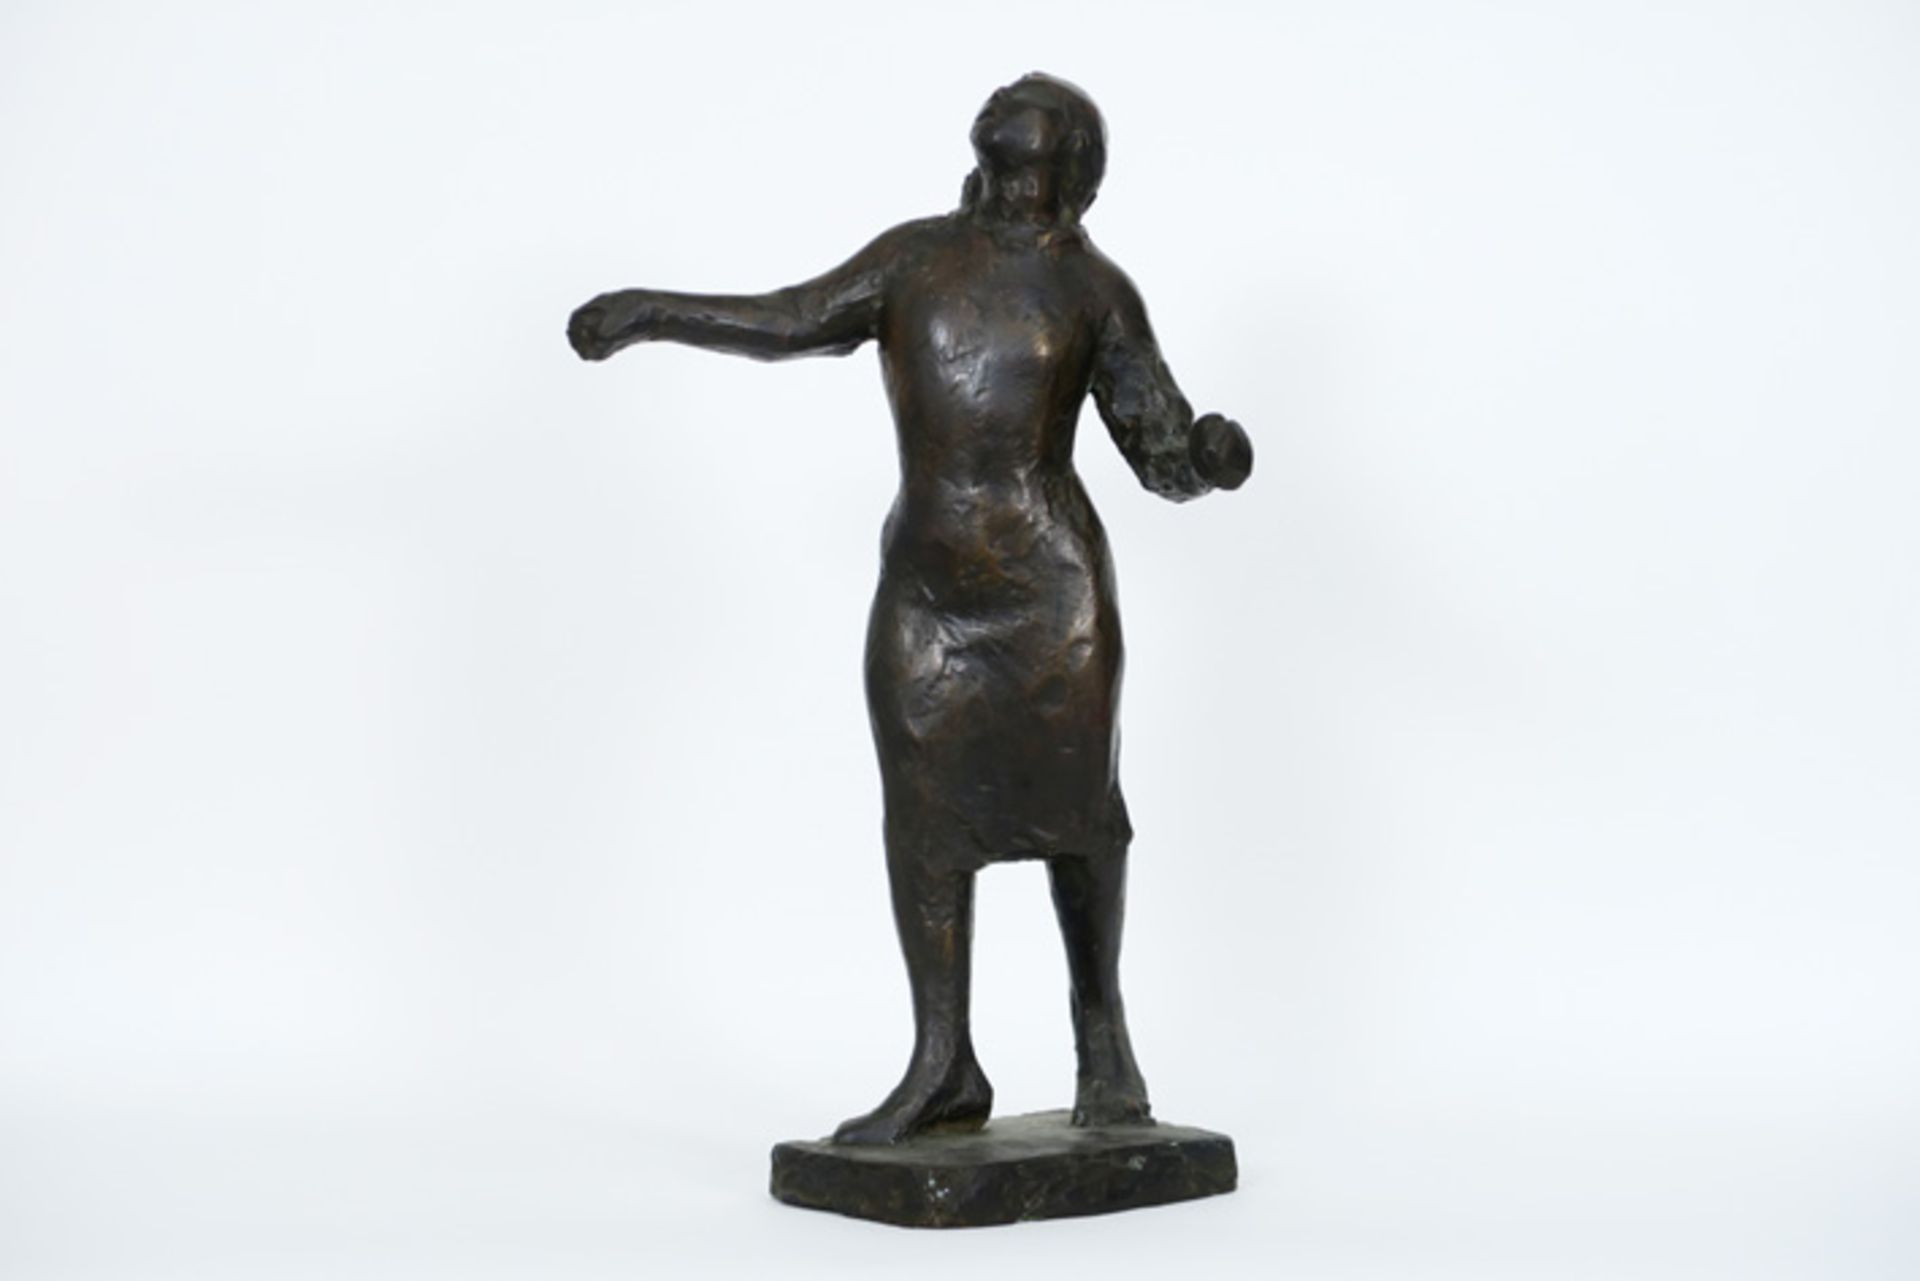 20th Cent. Mexican sculpture in bronze - attributed to Francesco Zuniga ZUNIGA FRANCESCO (1912 -